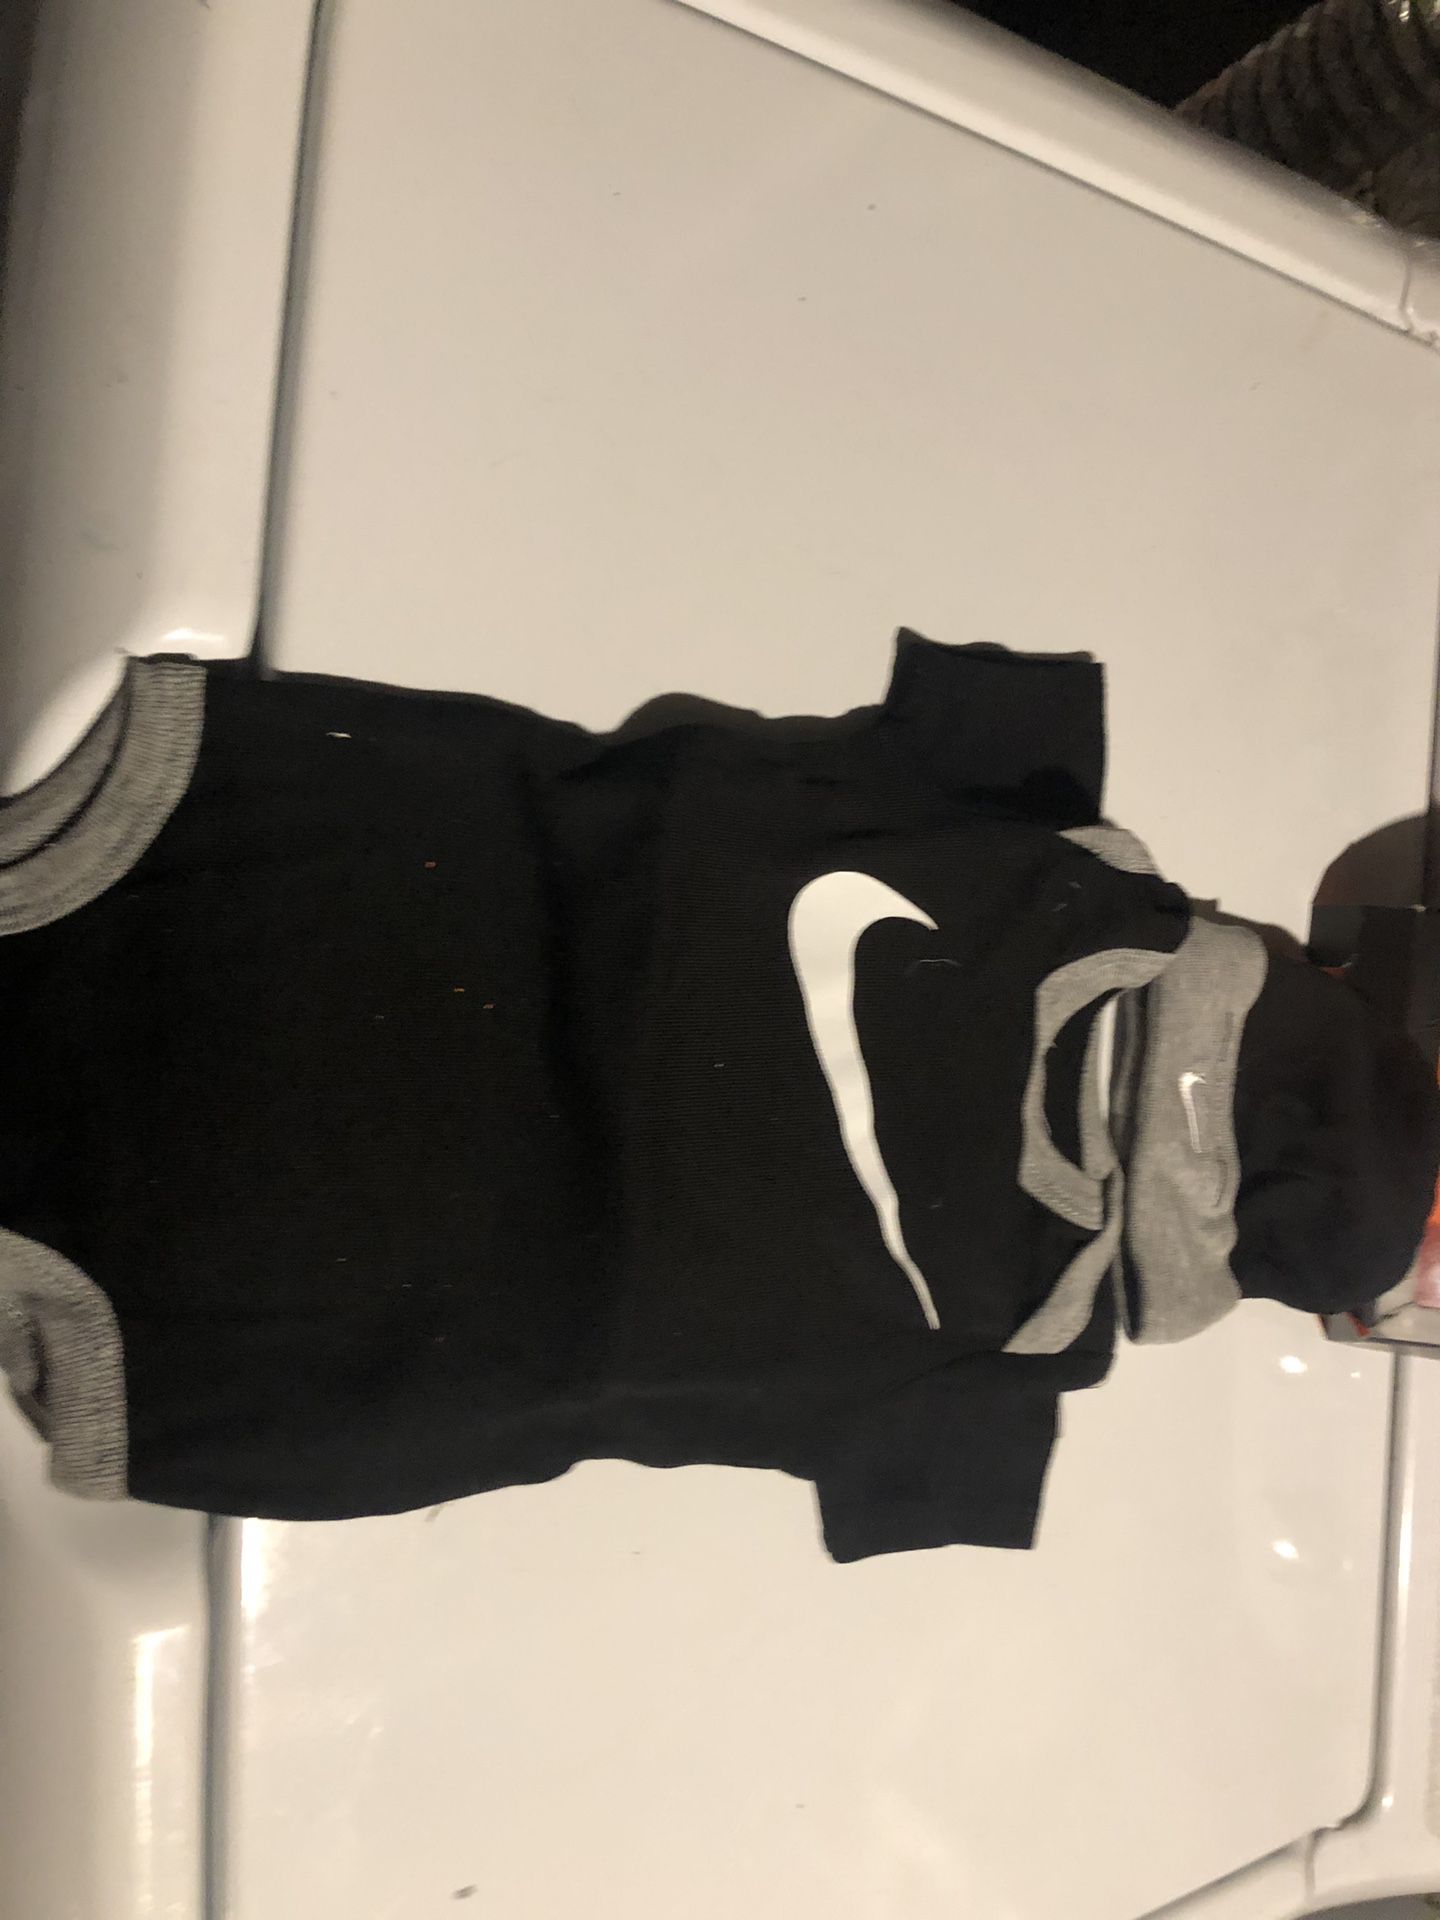 Nike 0-6 month onesie set